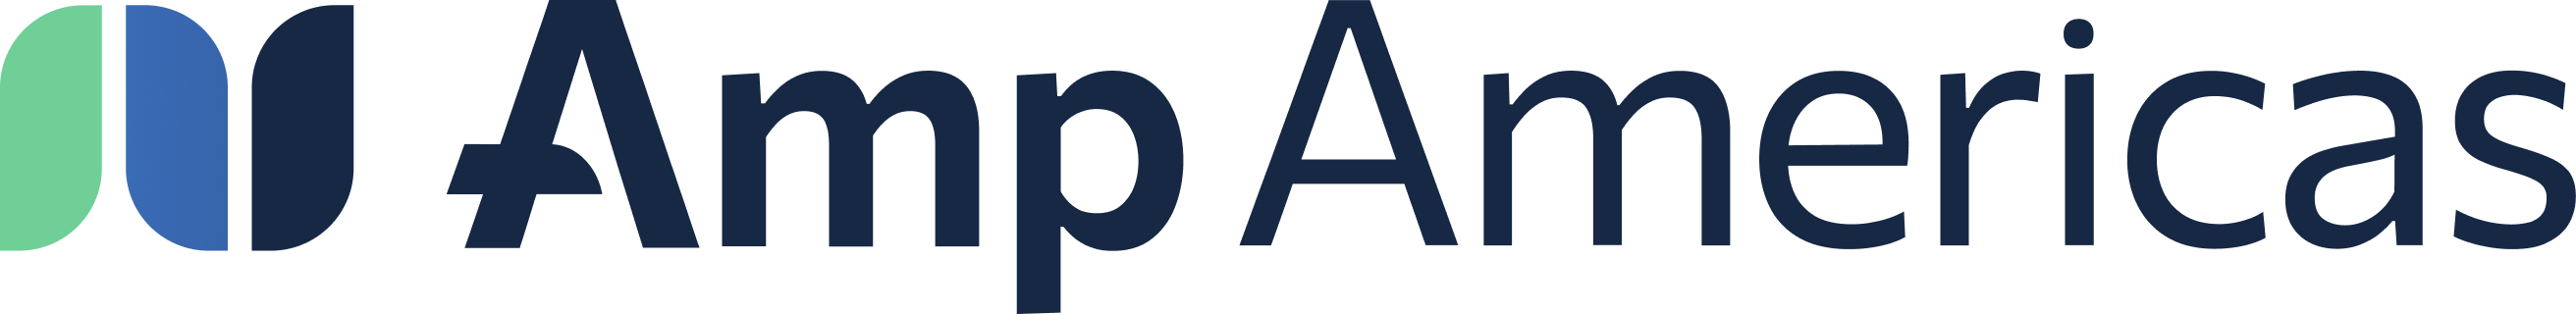 Amp Americas logo